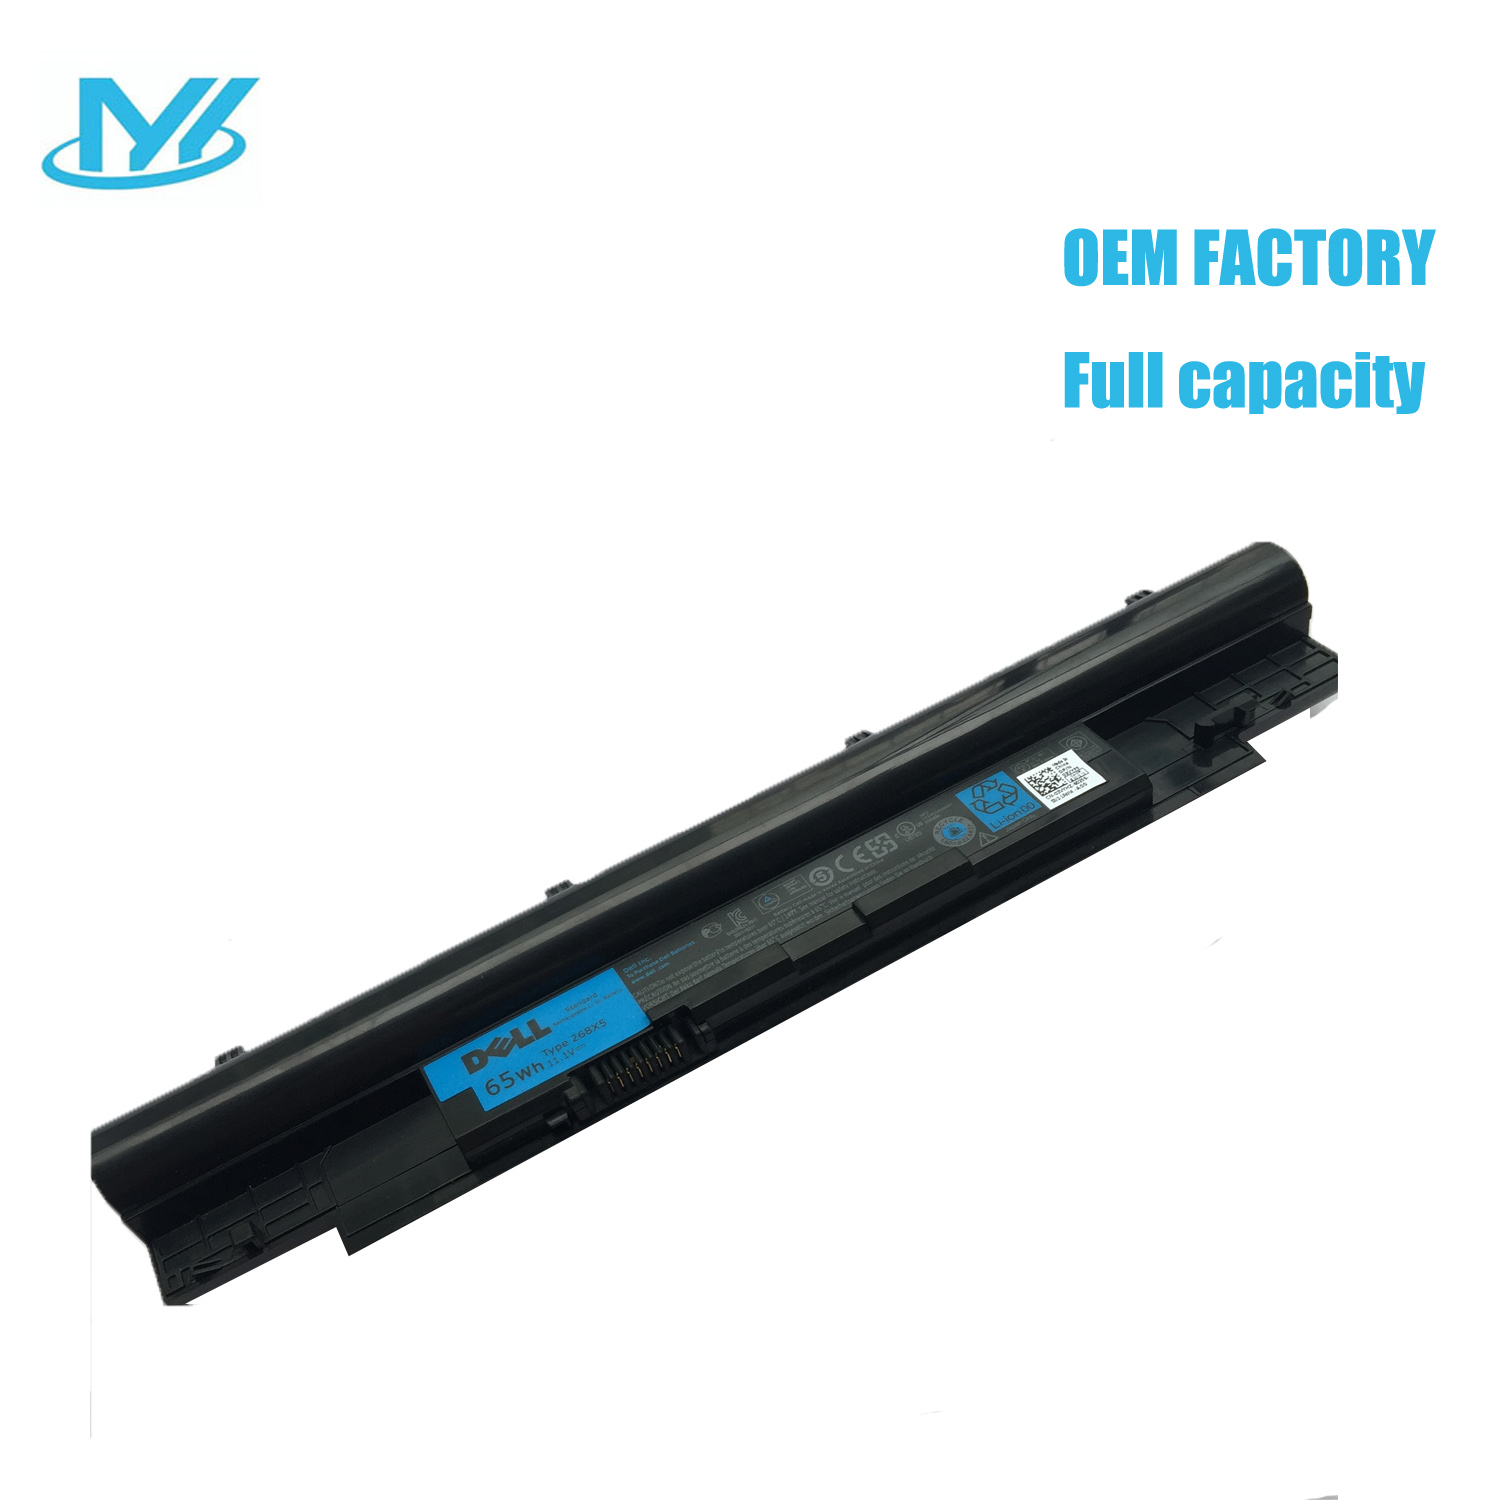 268X5 laptop battery lithium ion batteries 11.1V 65WH 5856mAh Battery for Dell N411Z Vostro V131 Inspiron 14Z-N411Z 13Z 14Z